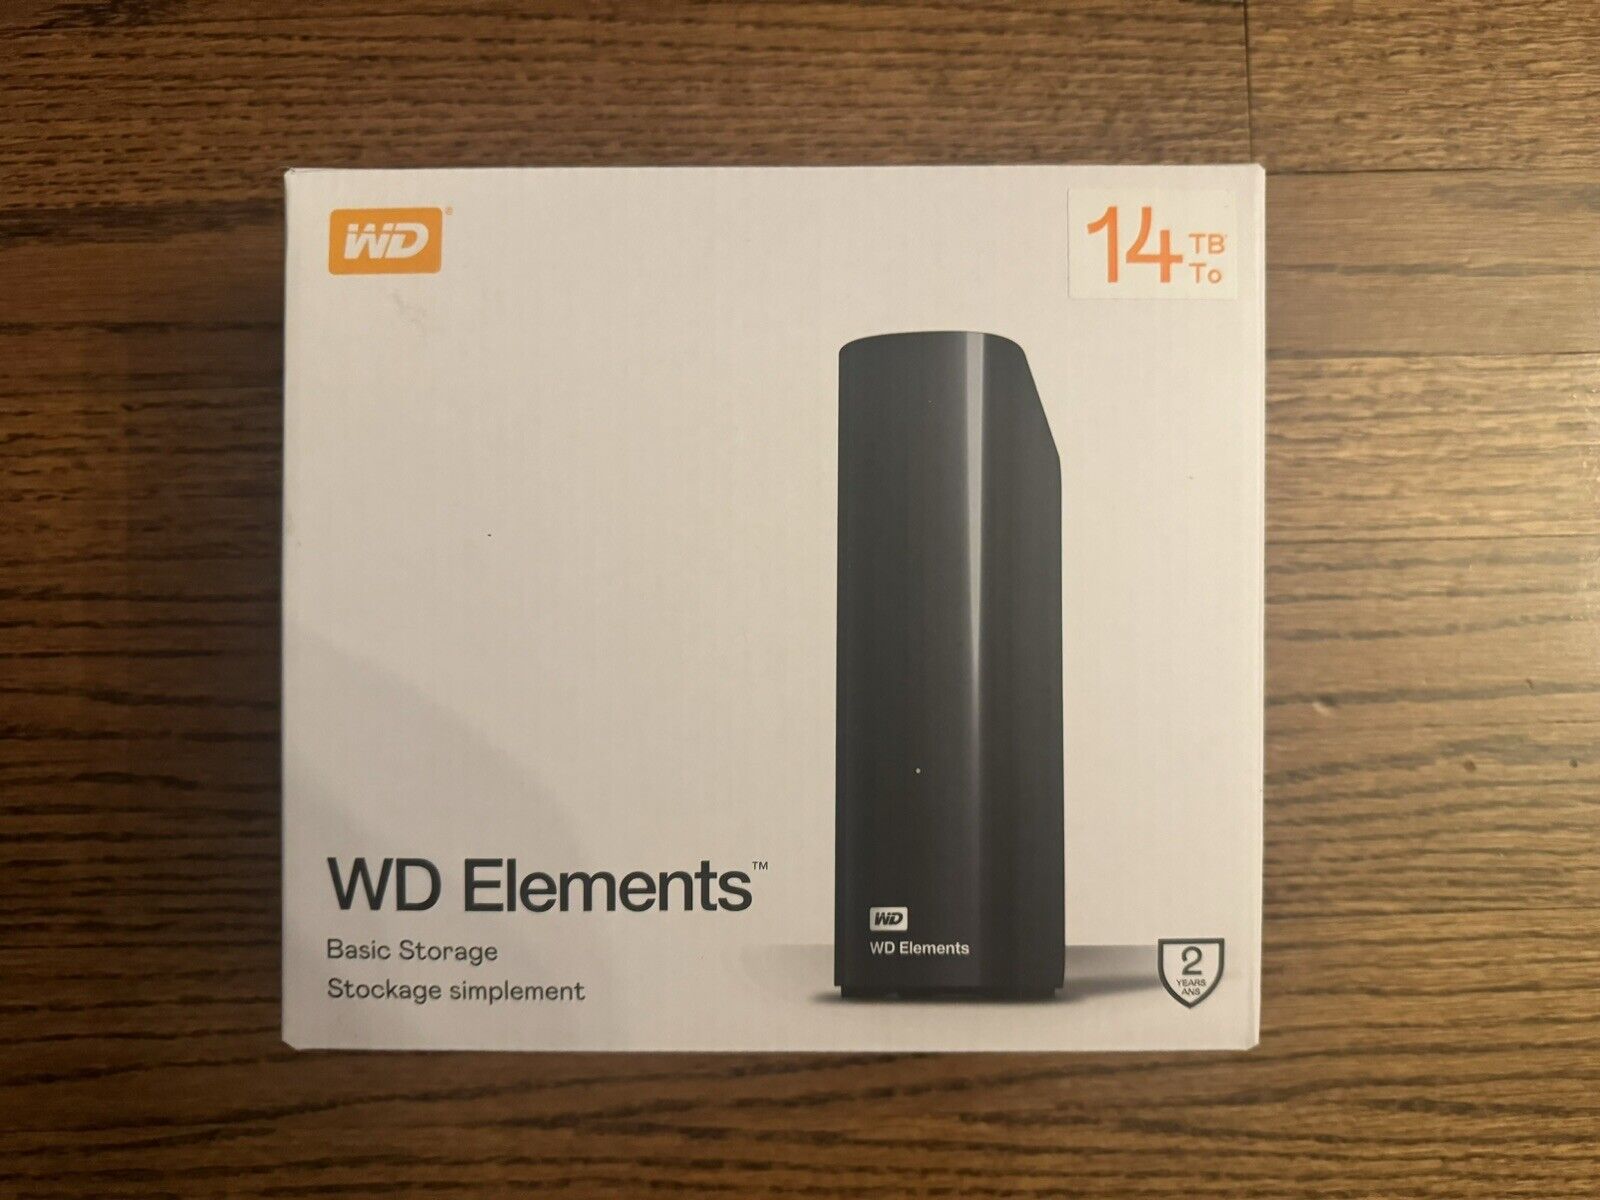 Western Digital WD Elements 14 TB Black External Drive